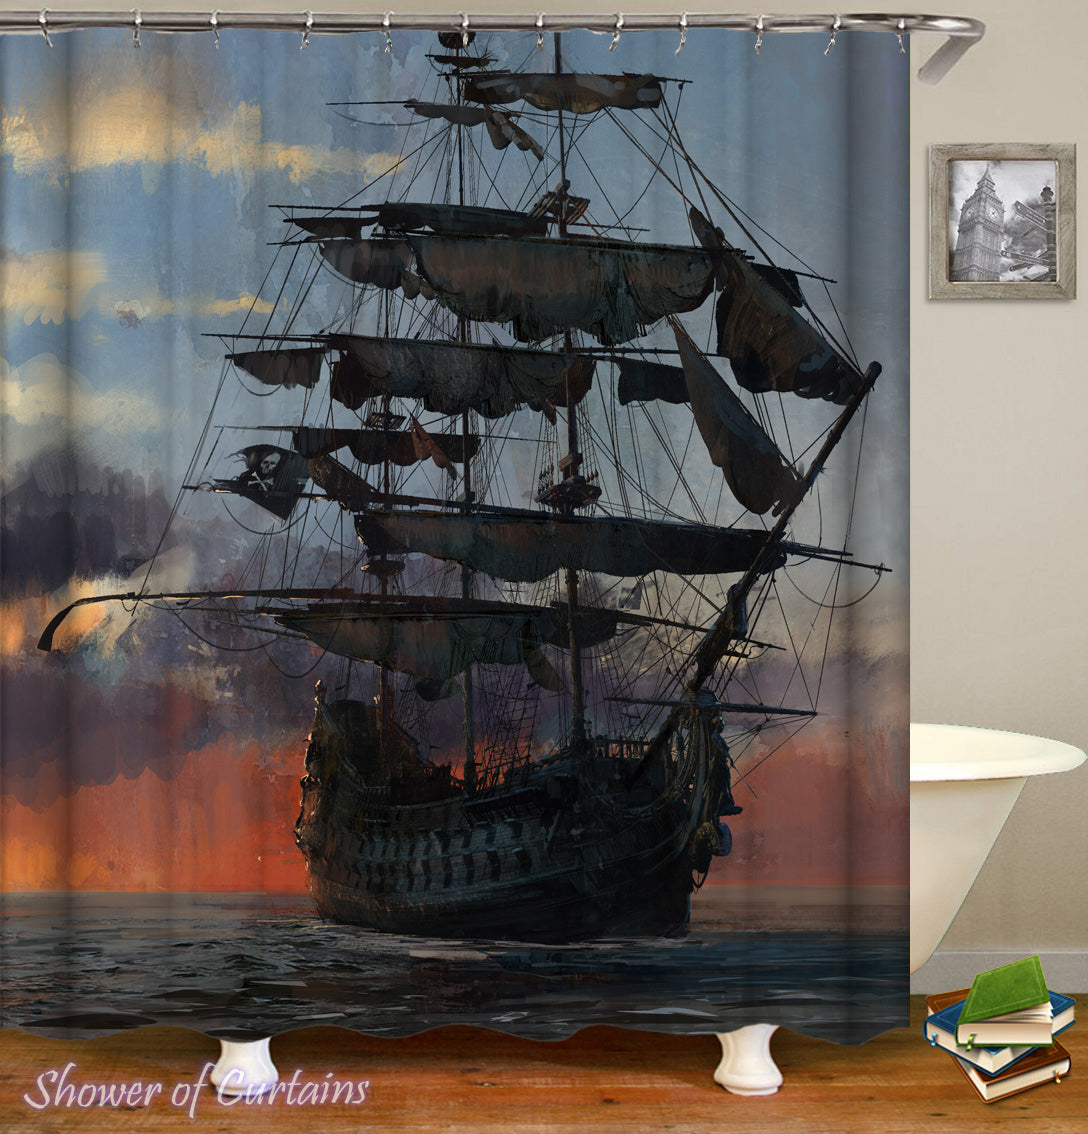 pittsburgh pirates shower curtain